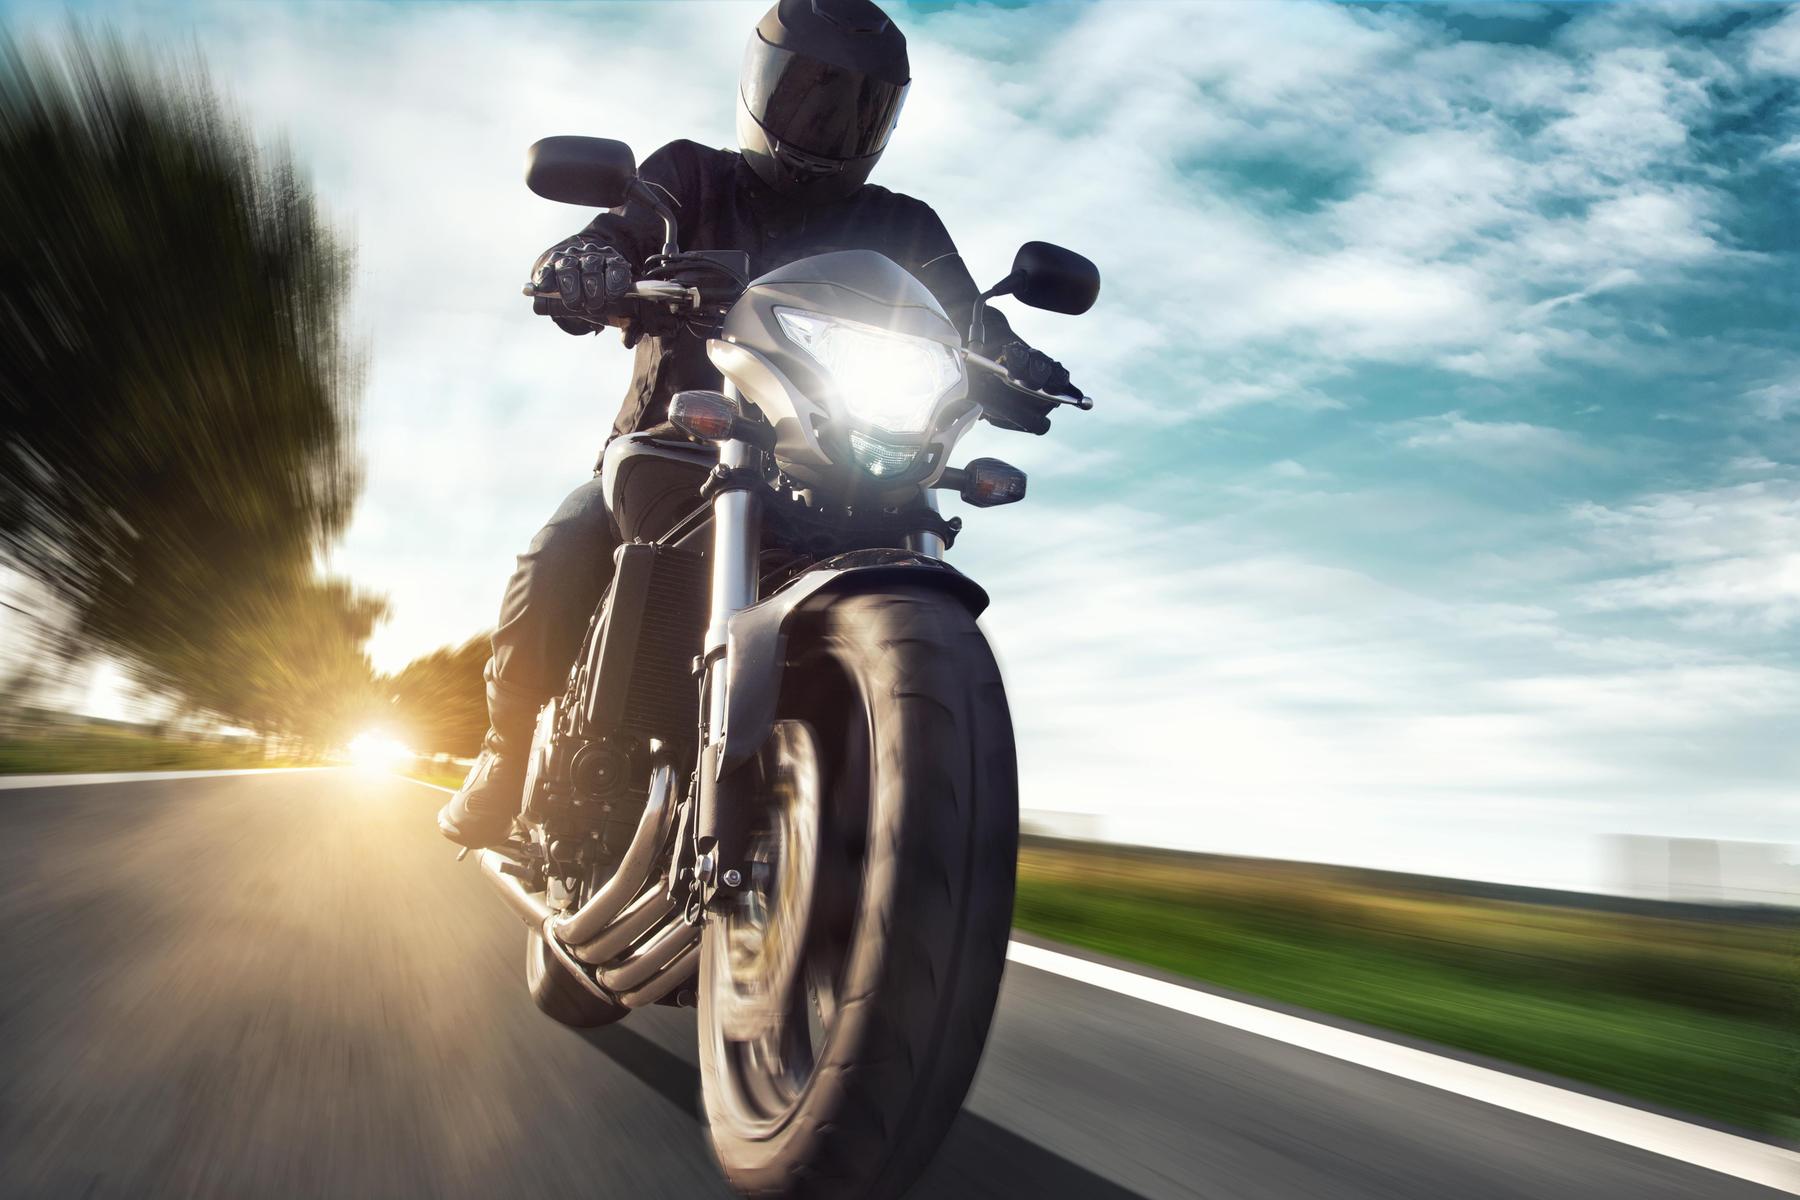 Durch die Luft katapultiert: Motorradlenker (20) kollidiert bei Überholmanöver frontal mit Pkw